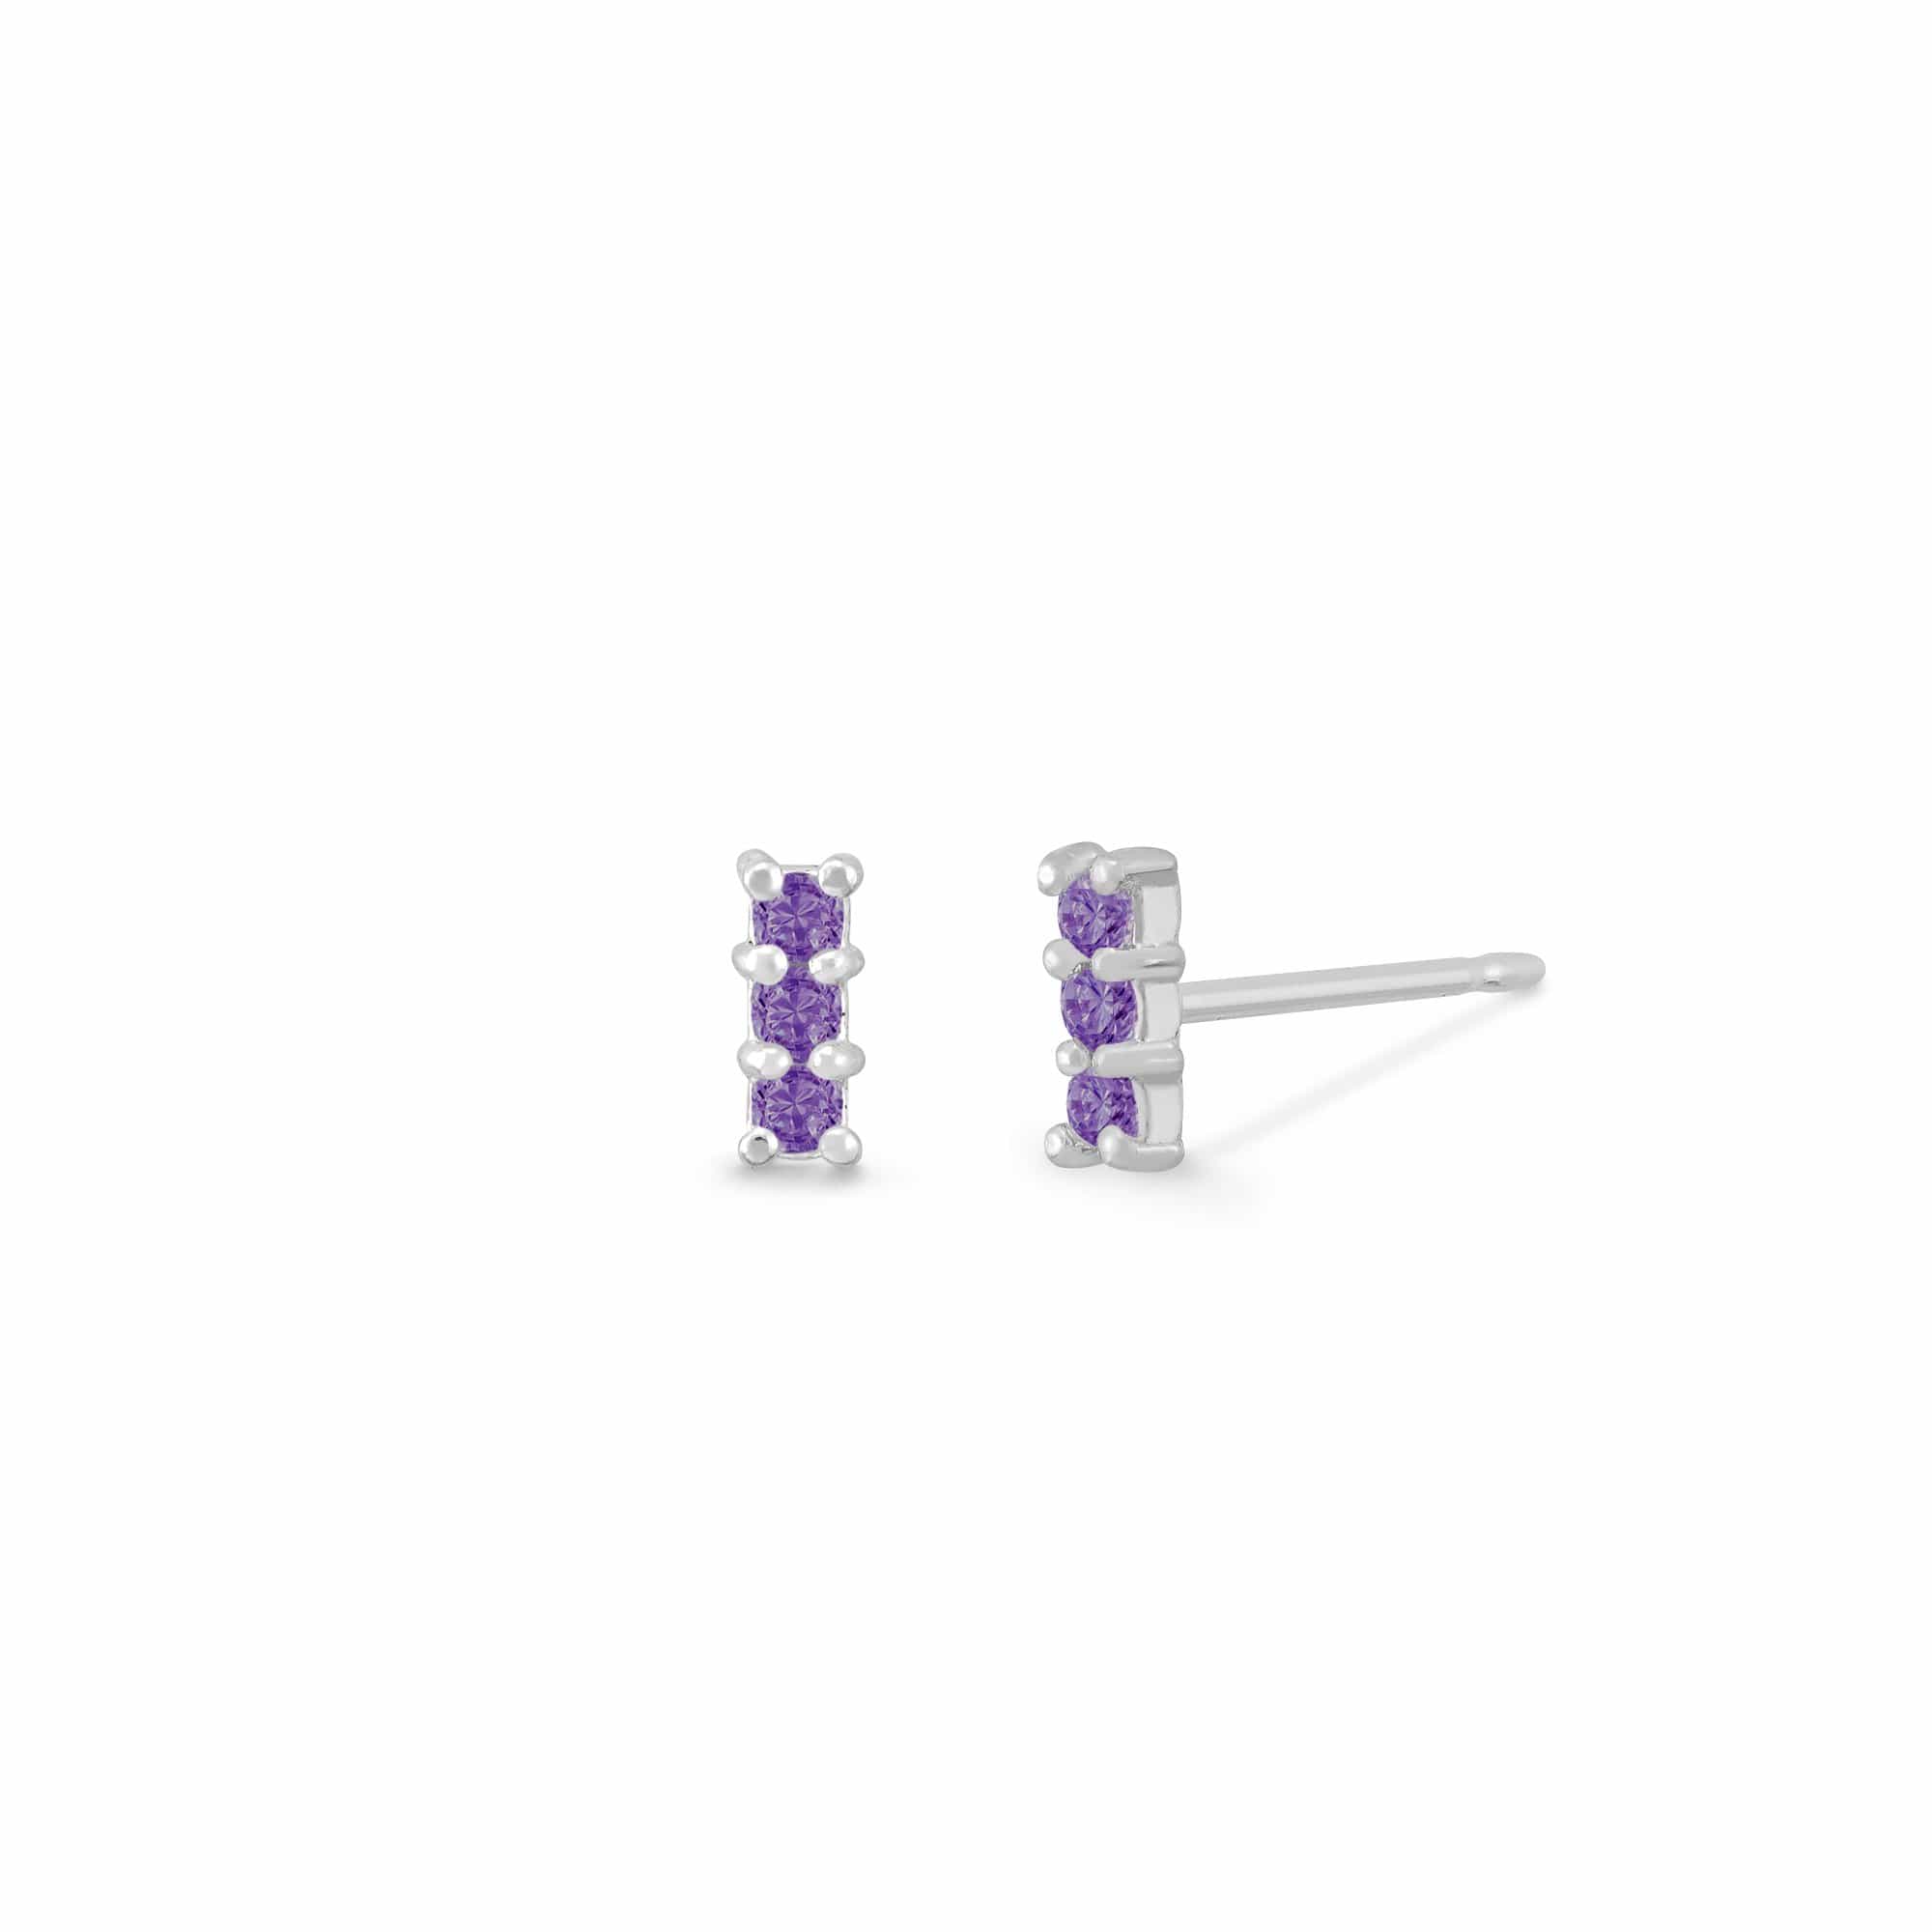 Boma Jewelry Earrings Amethyst Mini Gemstone Bar Studs